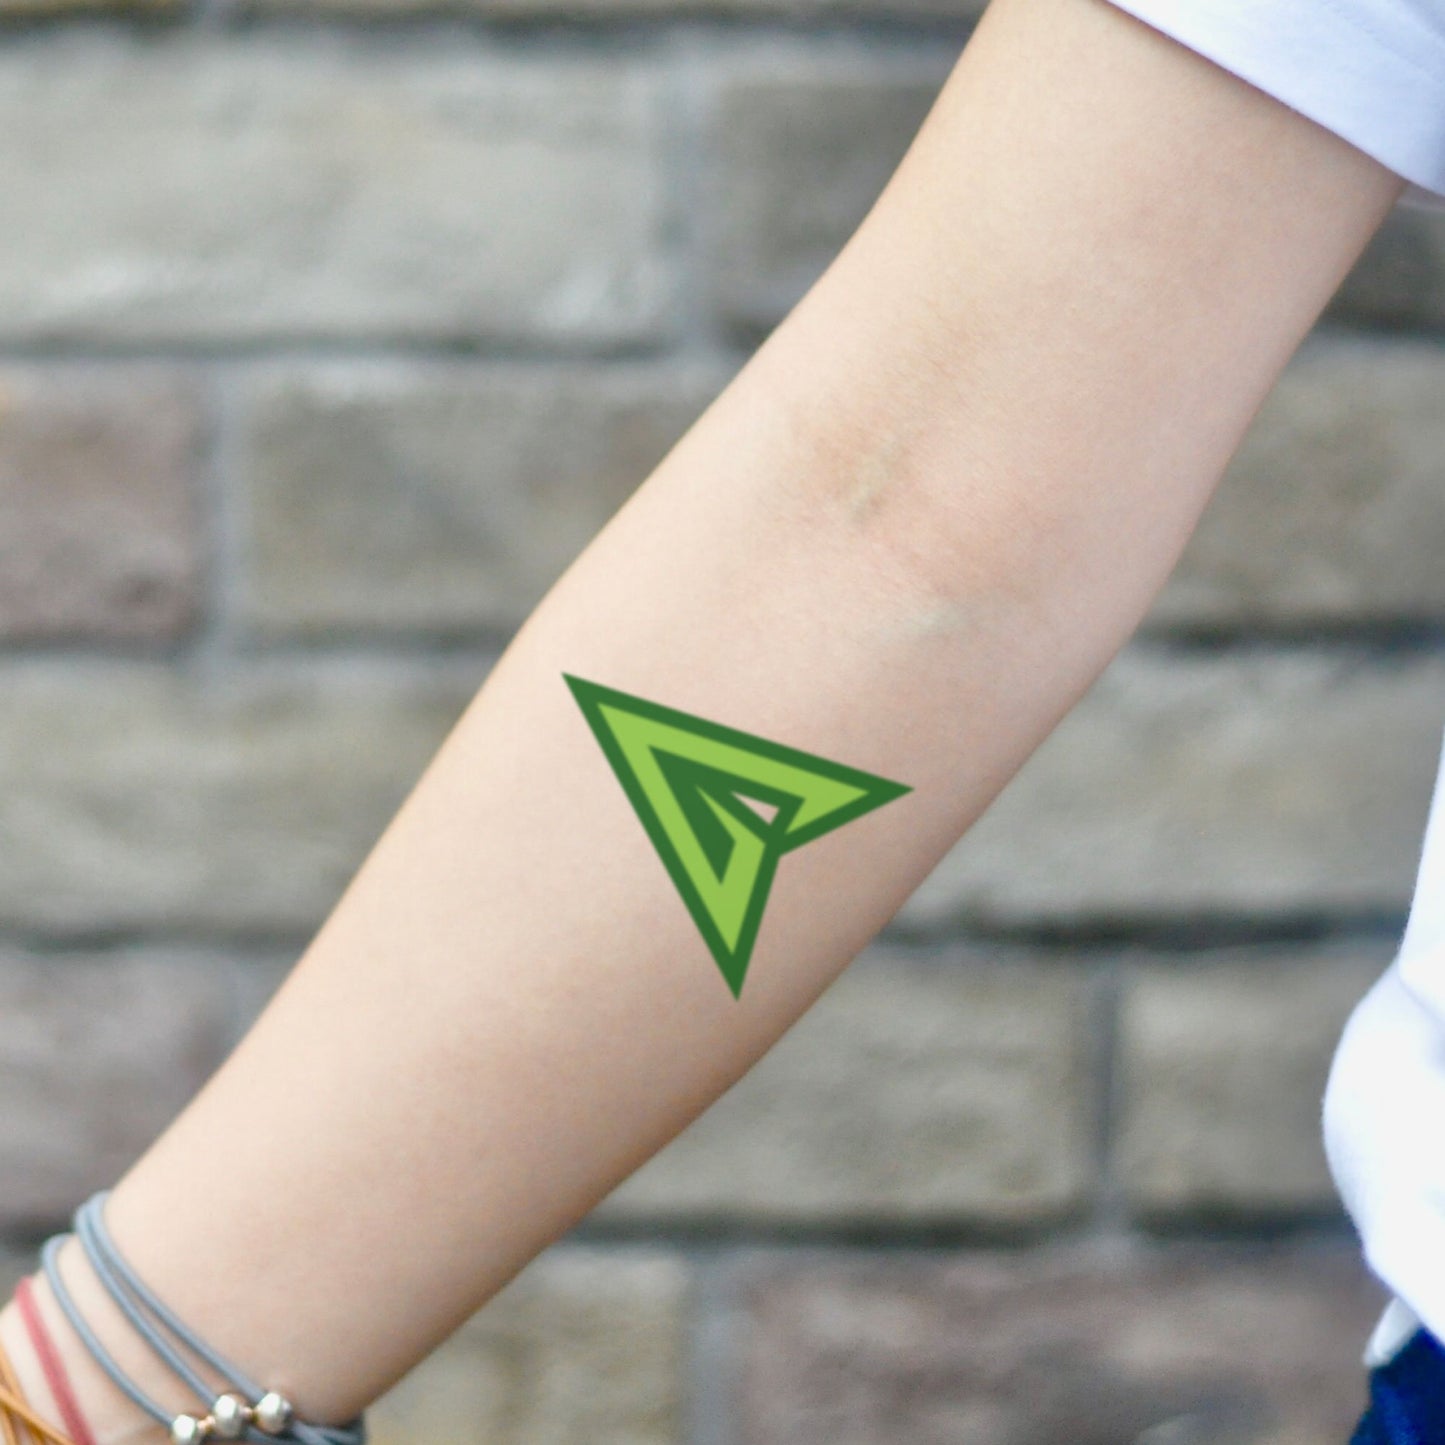 fake small green arrow color temporary tattoo sticker design idea on inner arm